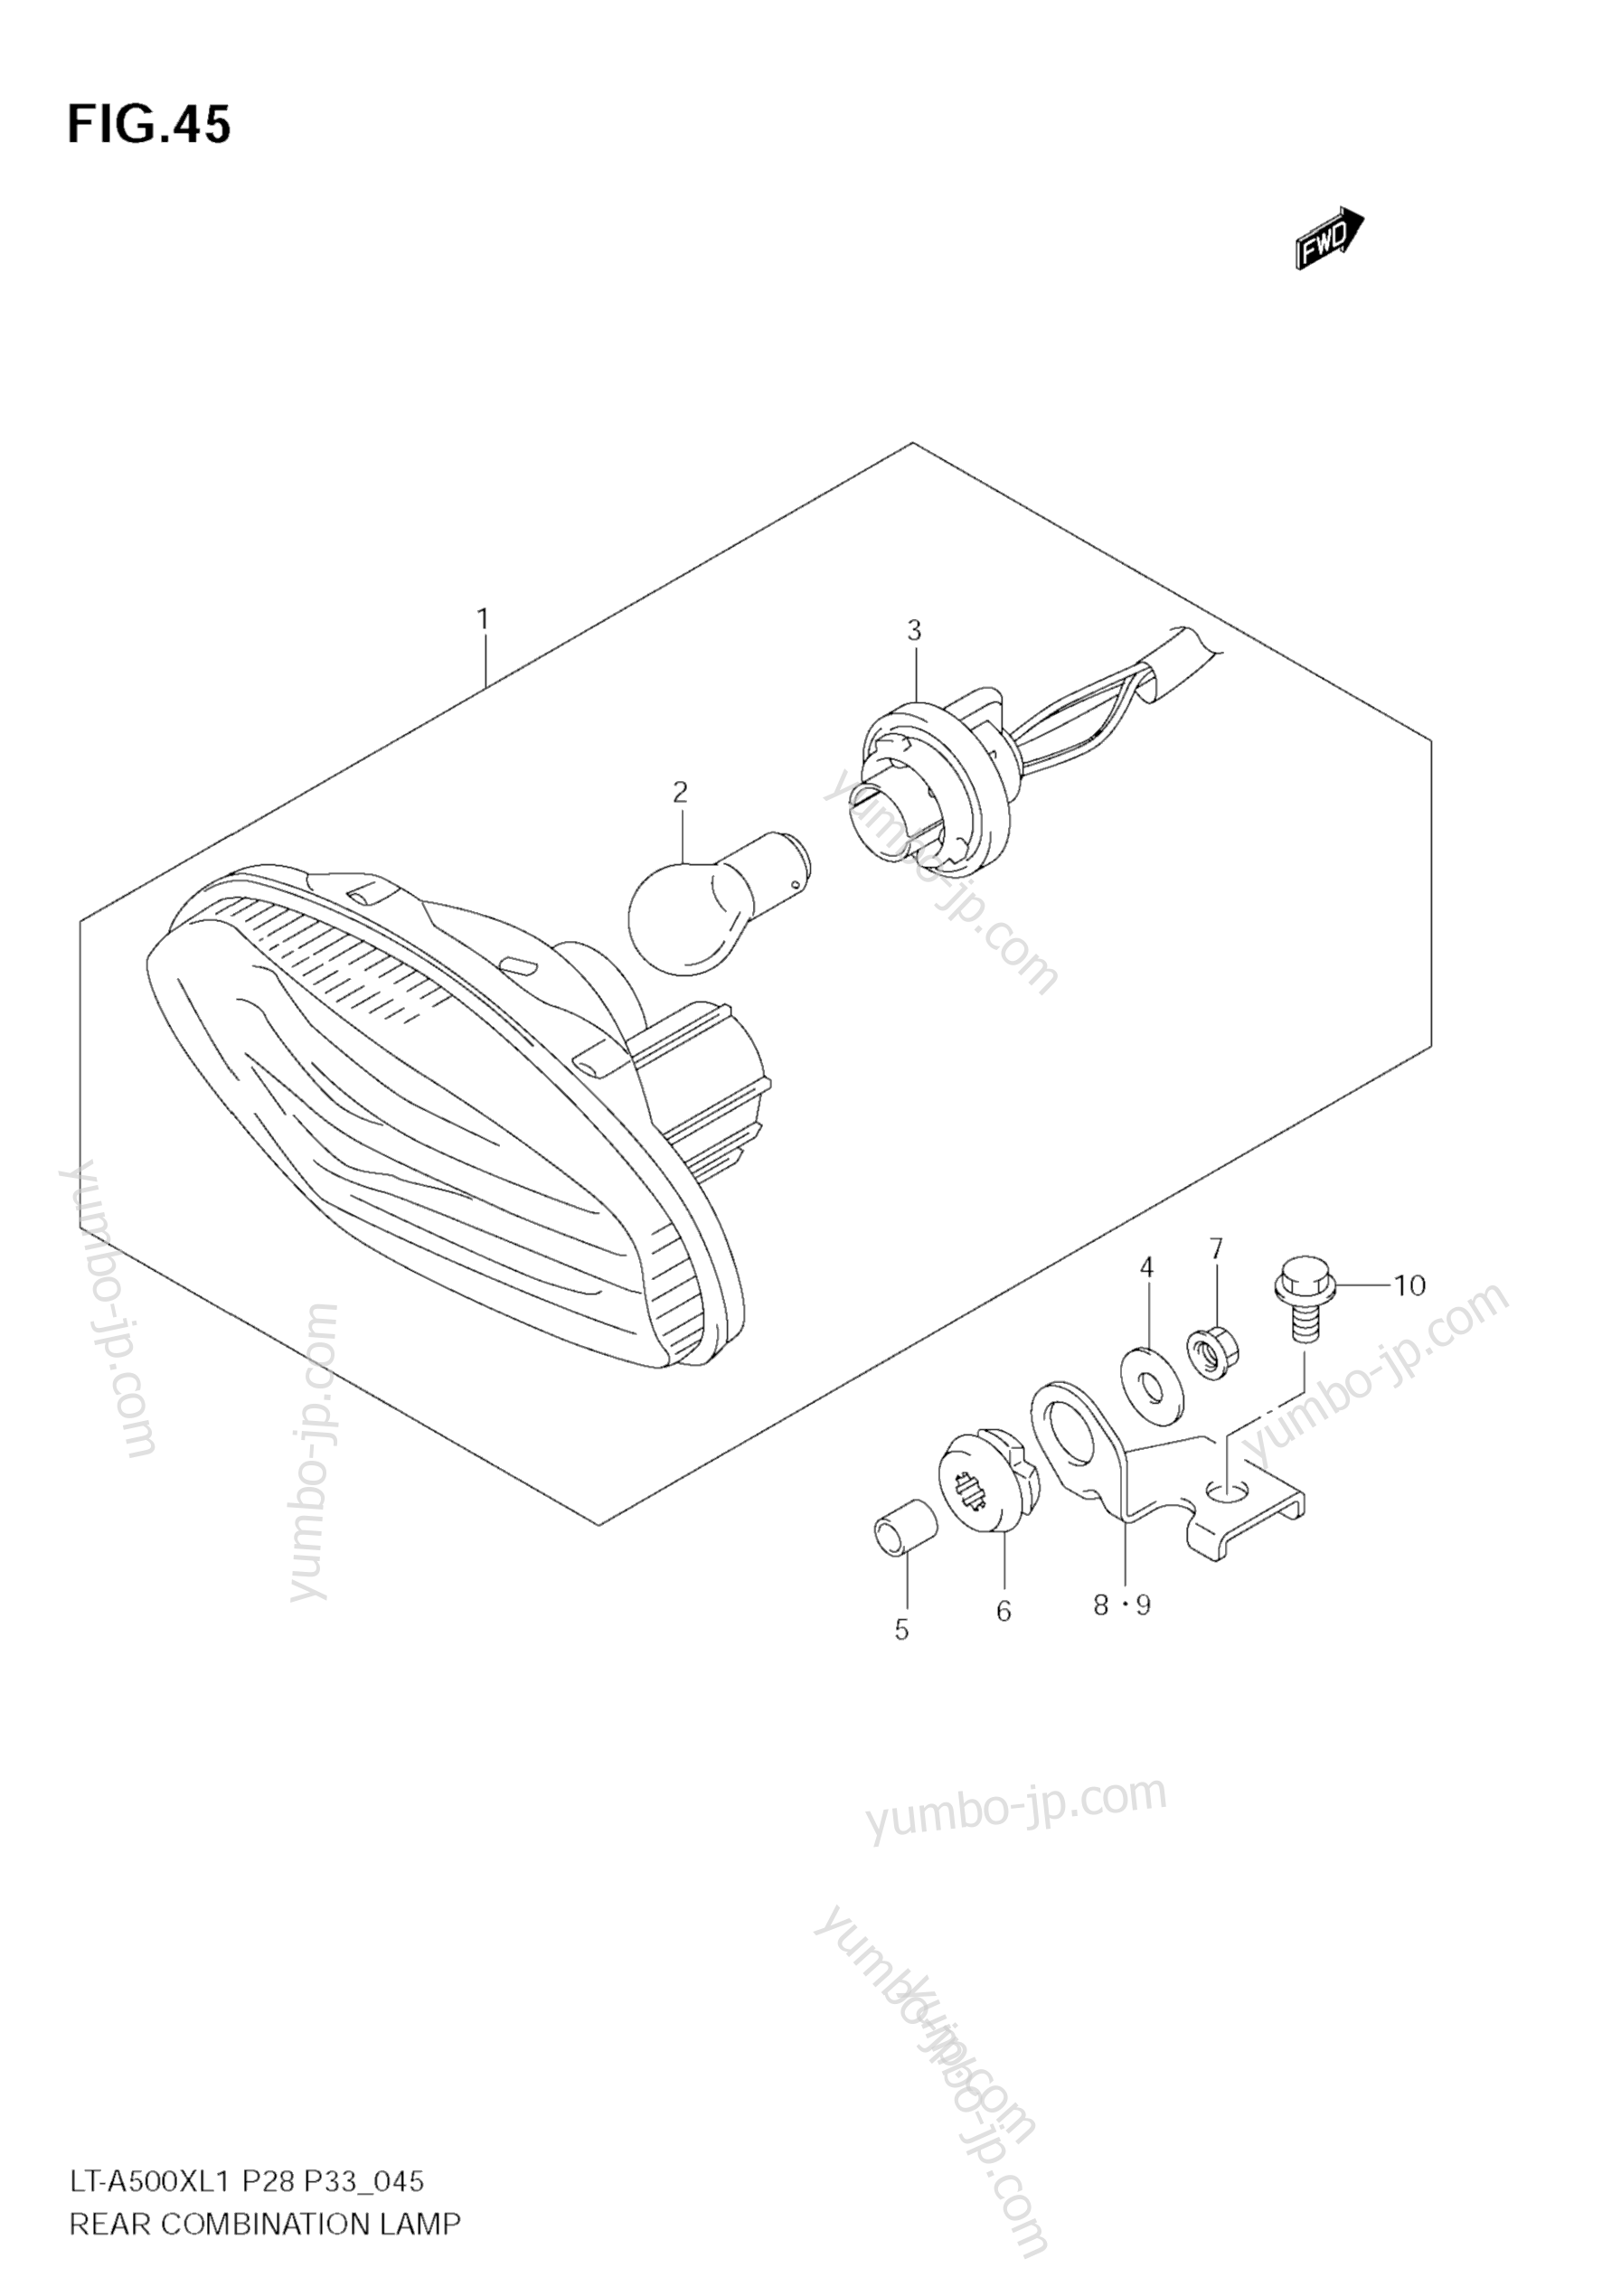 REAR COMBINATION LAMP (LT-A500XZ L1 E33) for ATVs SUZUKI KingQuad (LT-A500X) 2011 year